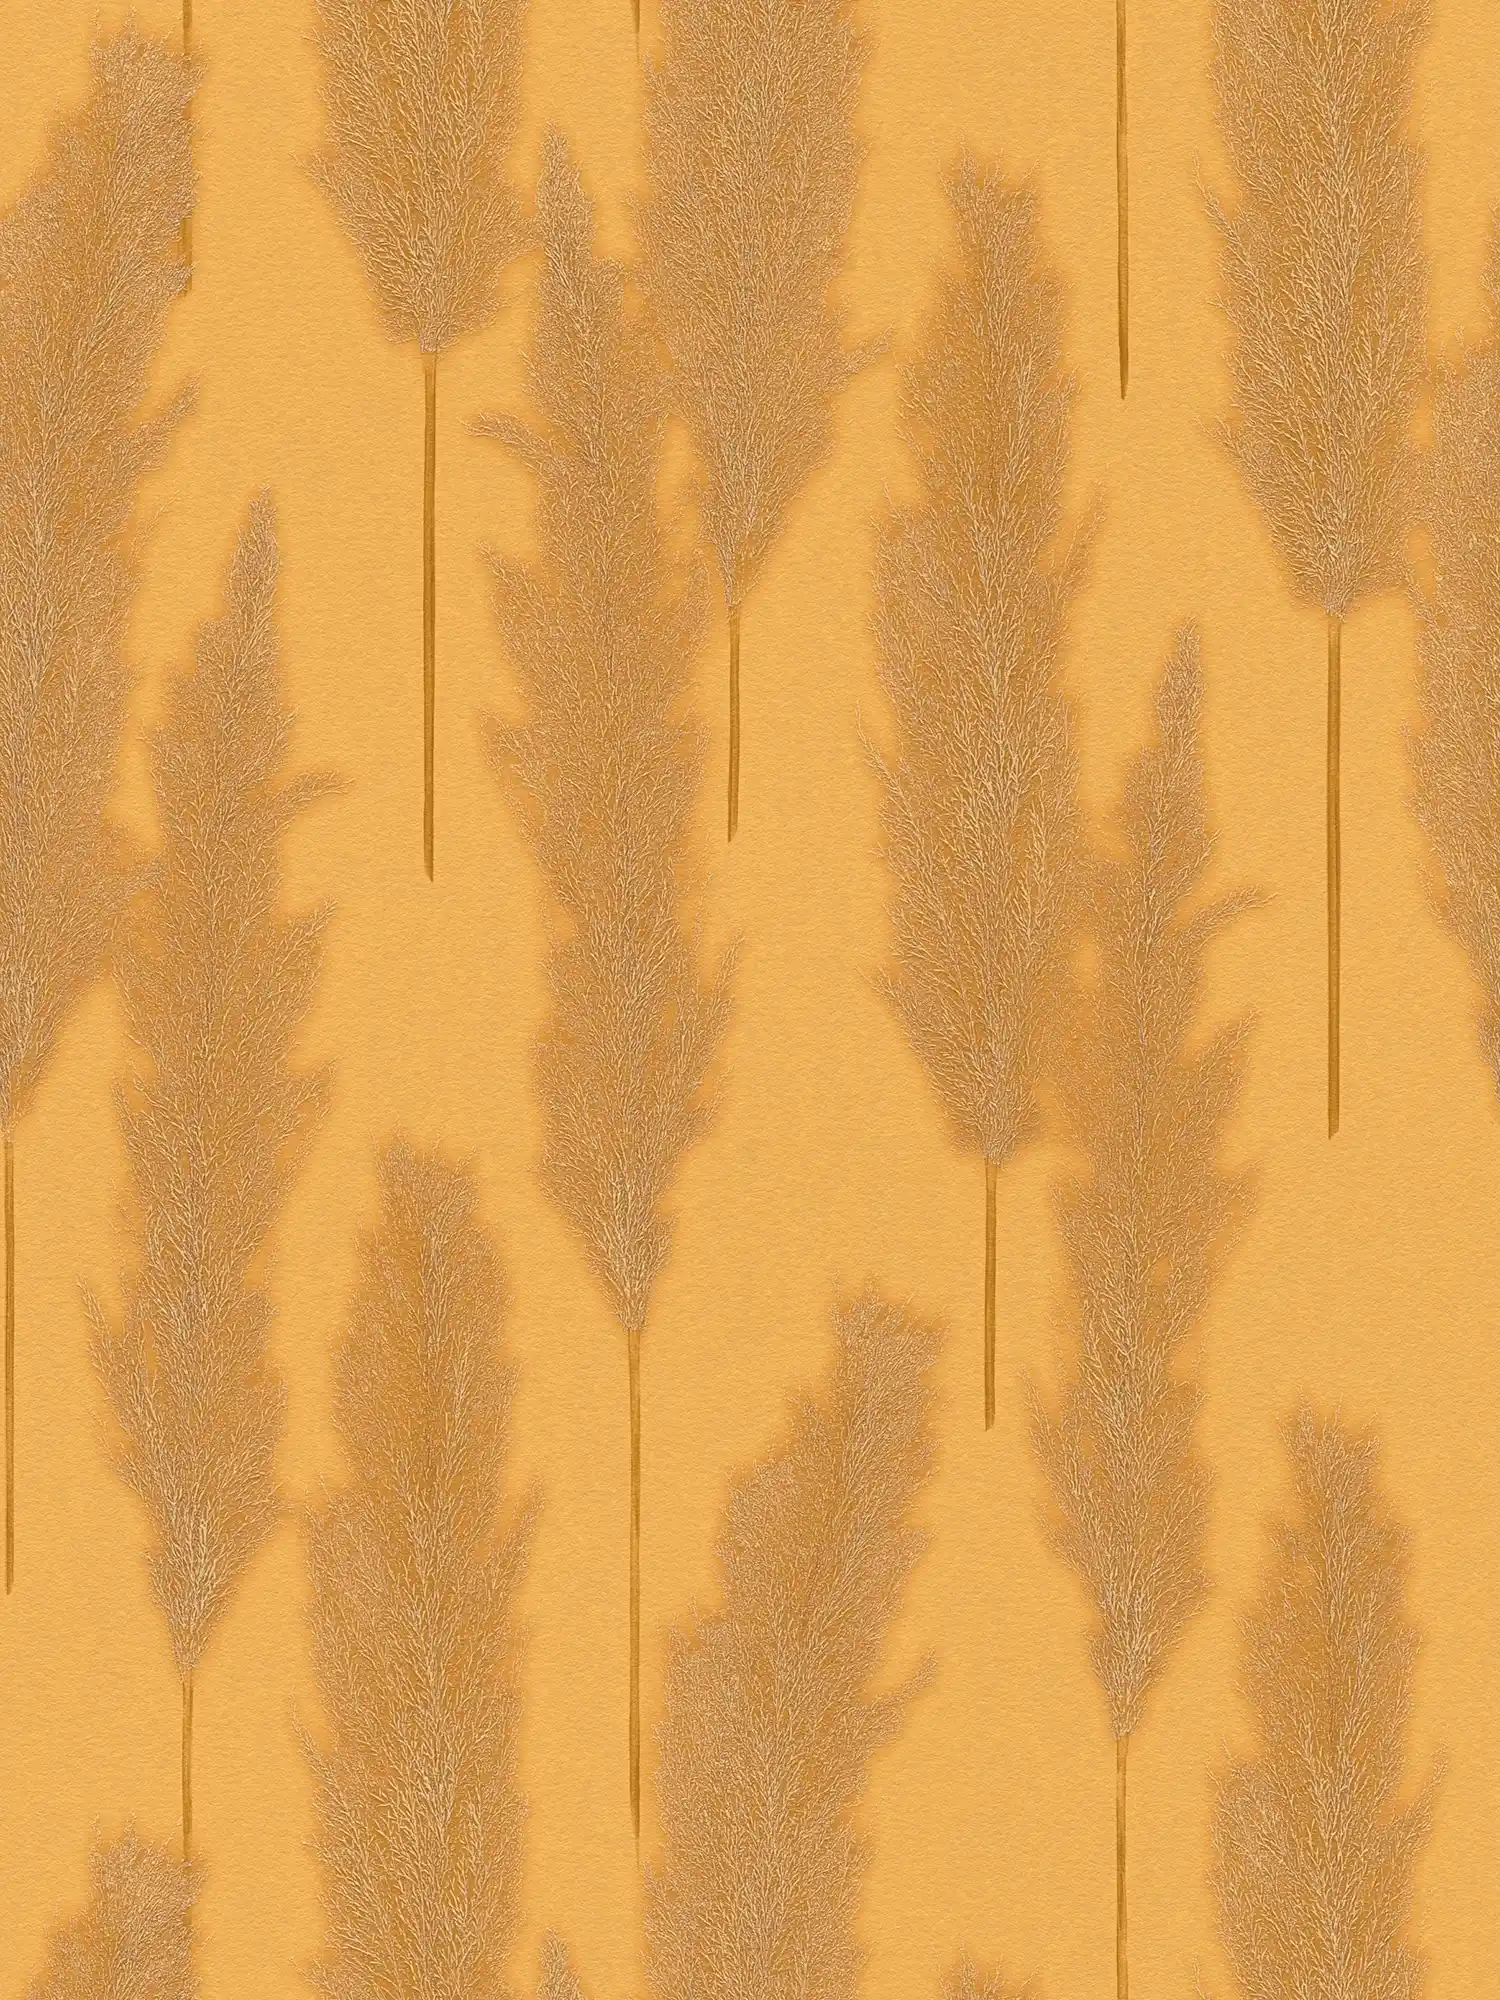 Wallpaper with pampas grass design - yellow, metallic
